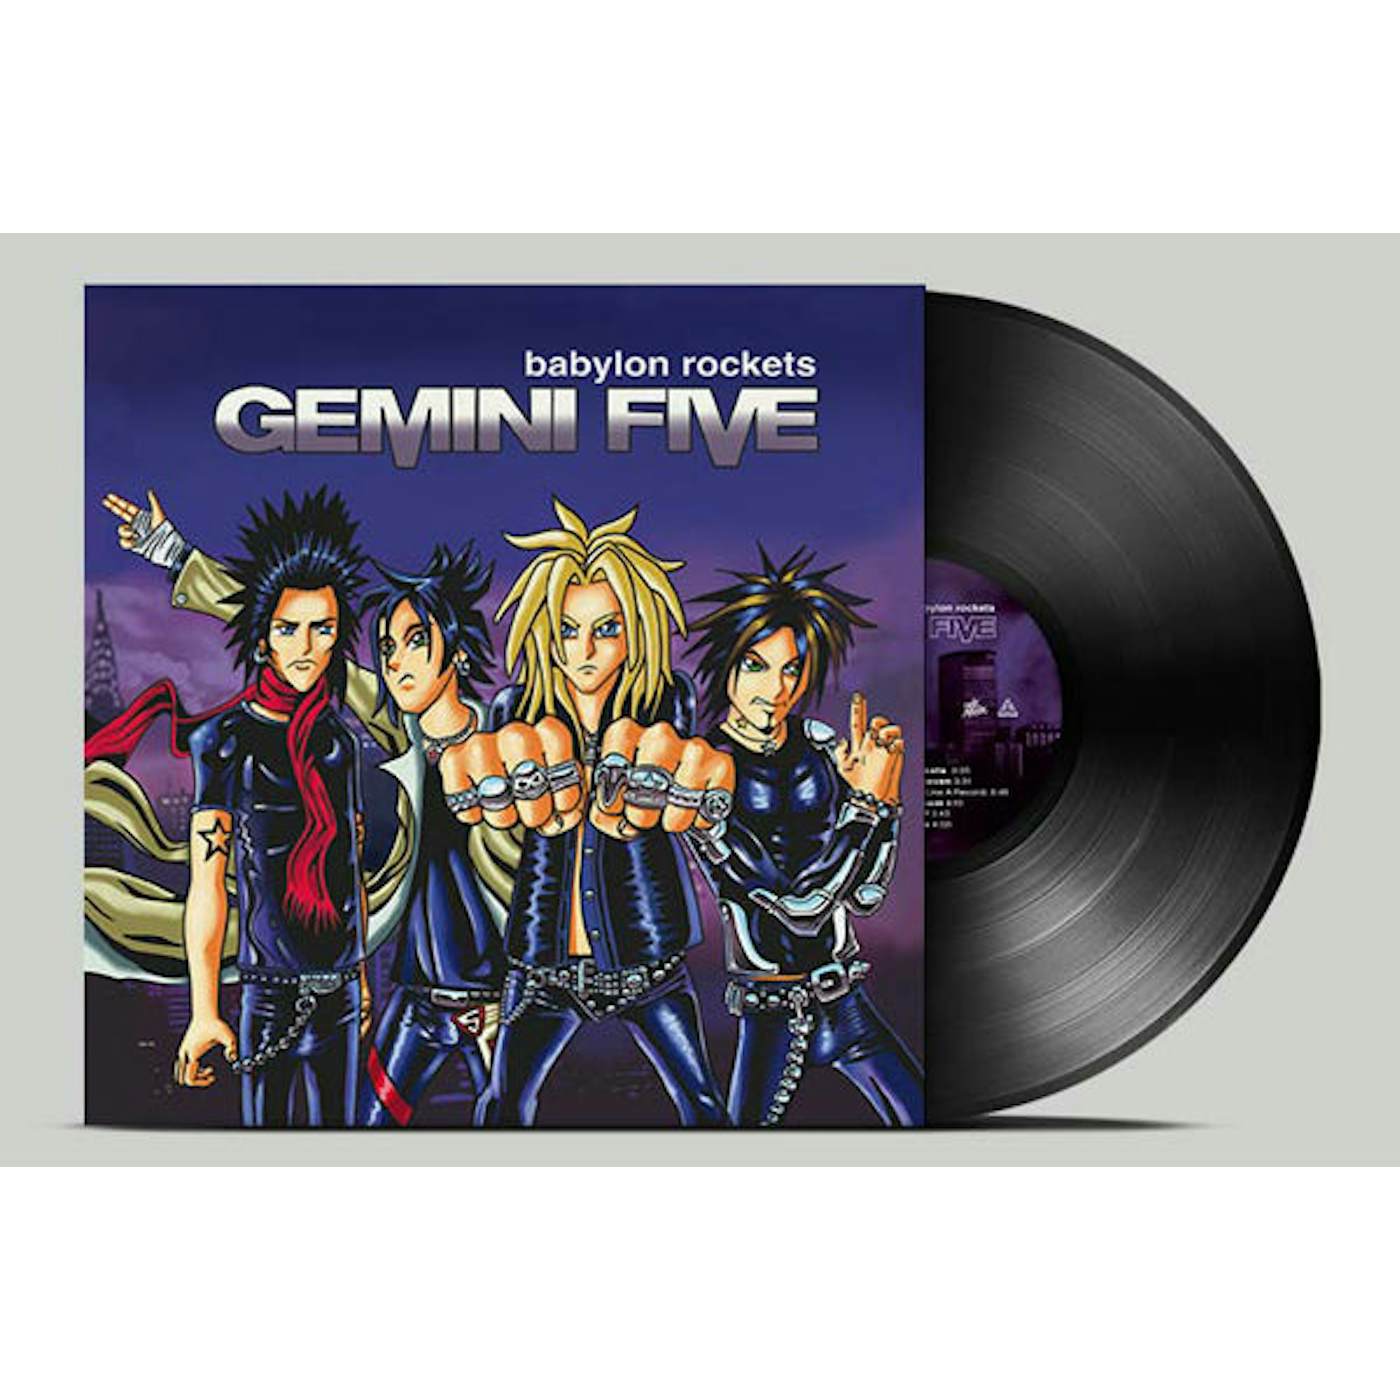 Gemini Five LP - Babylon Rockets (Vinyl)